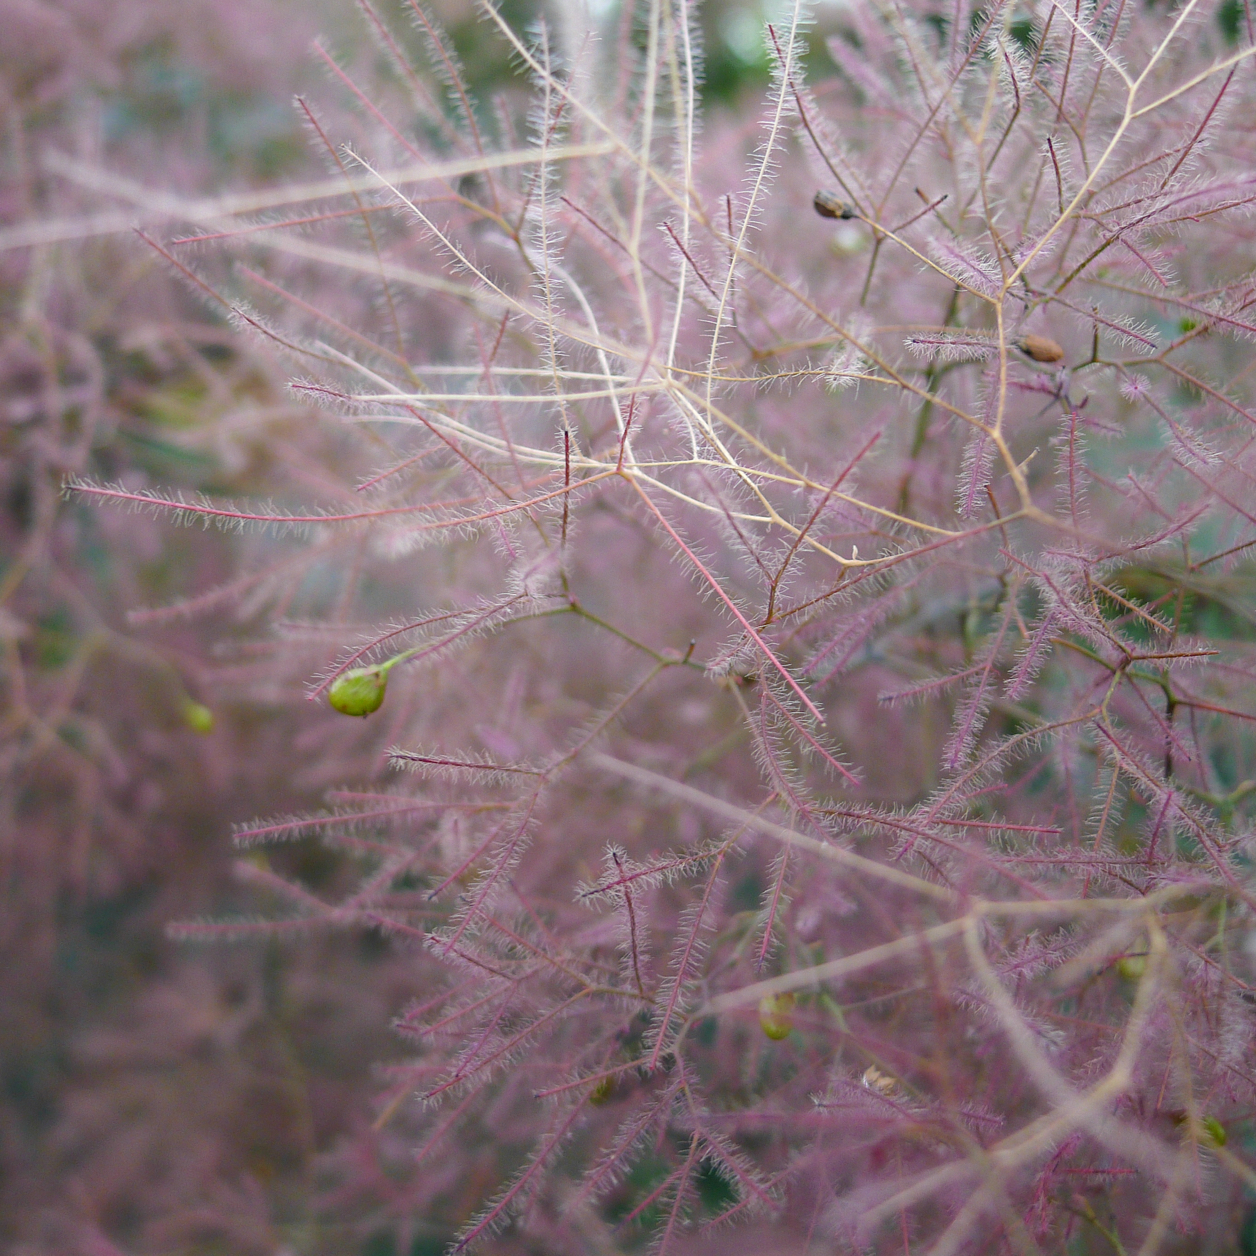 Closeup of a fuzzy purple plant looking like purple haze